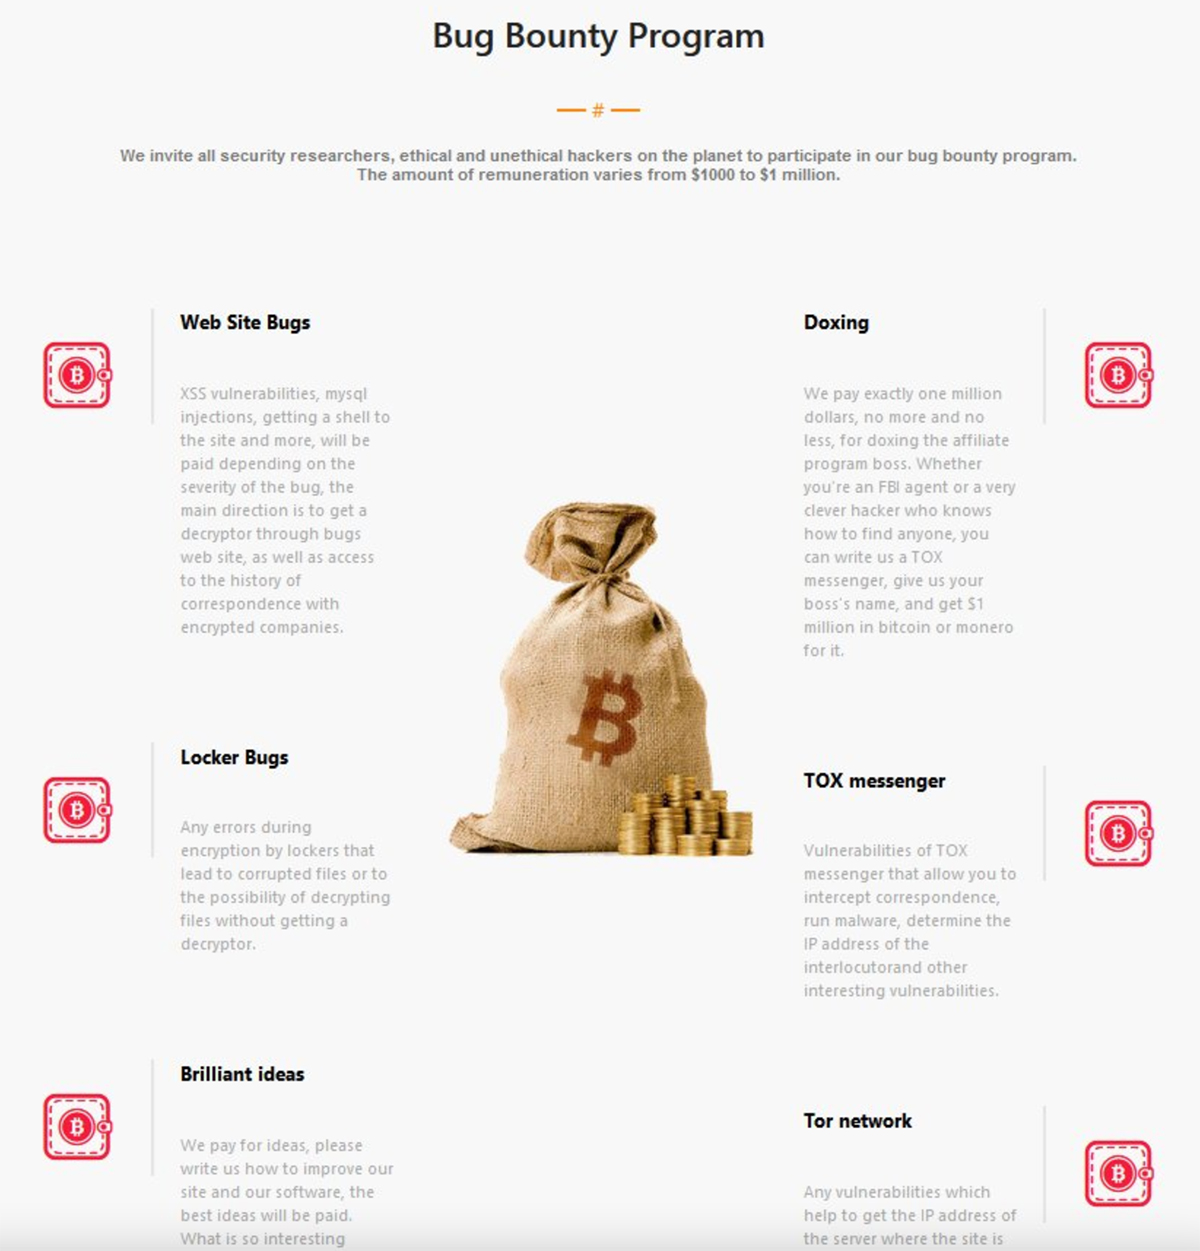 LockBit’s bug bounty program